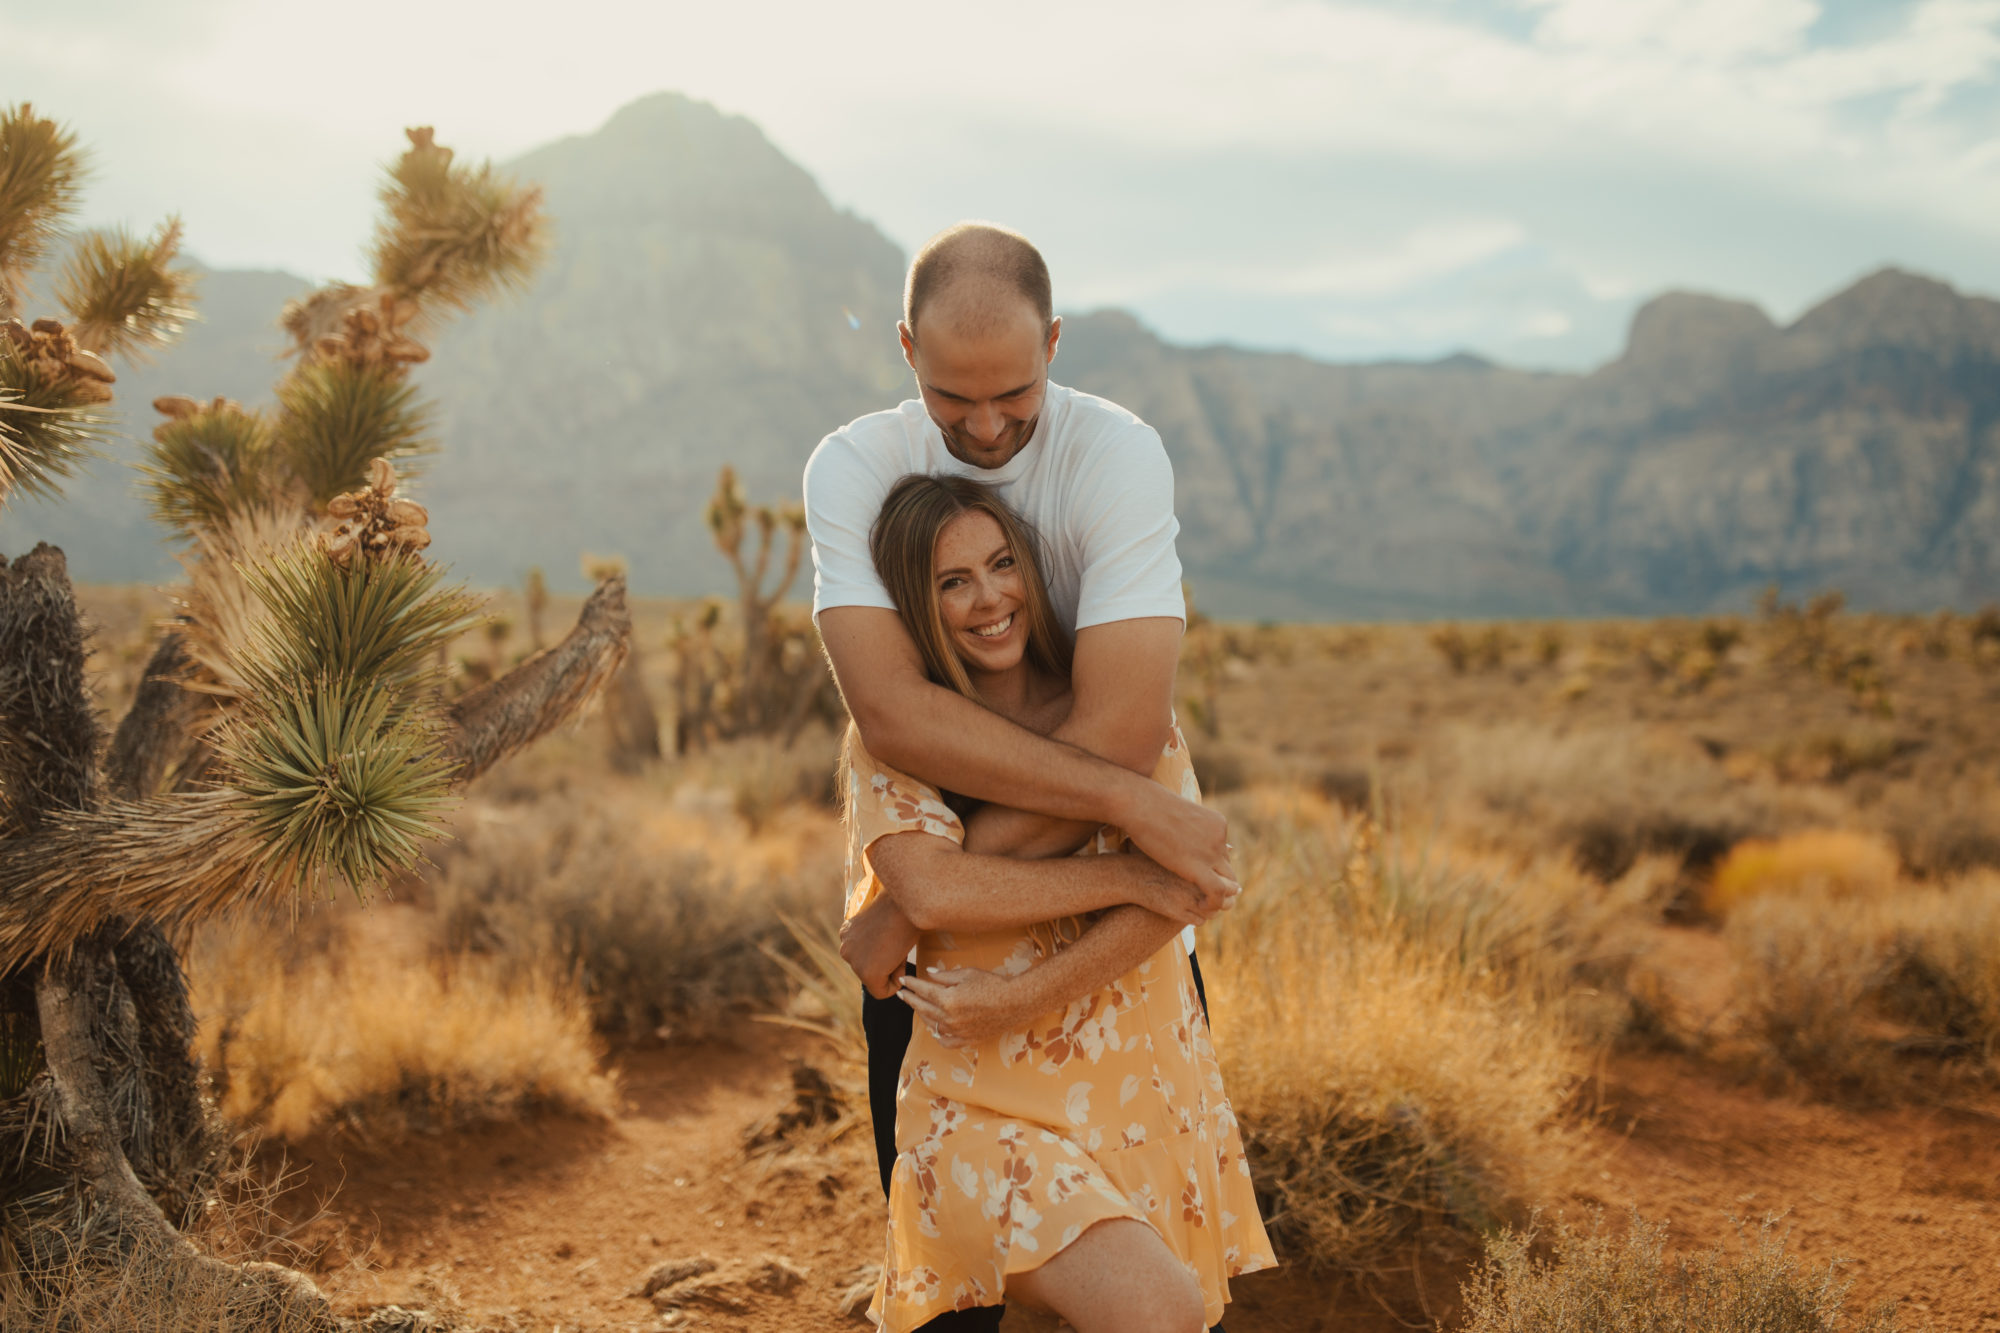 boyfriend hugging his girl friend from behind in the desert